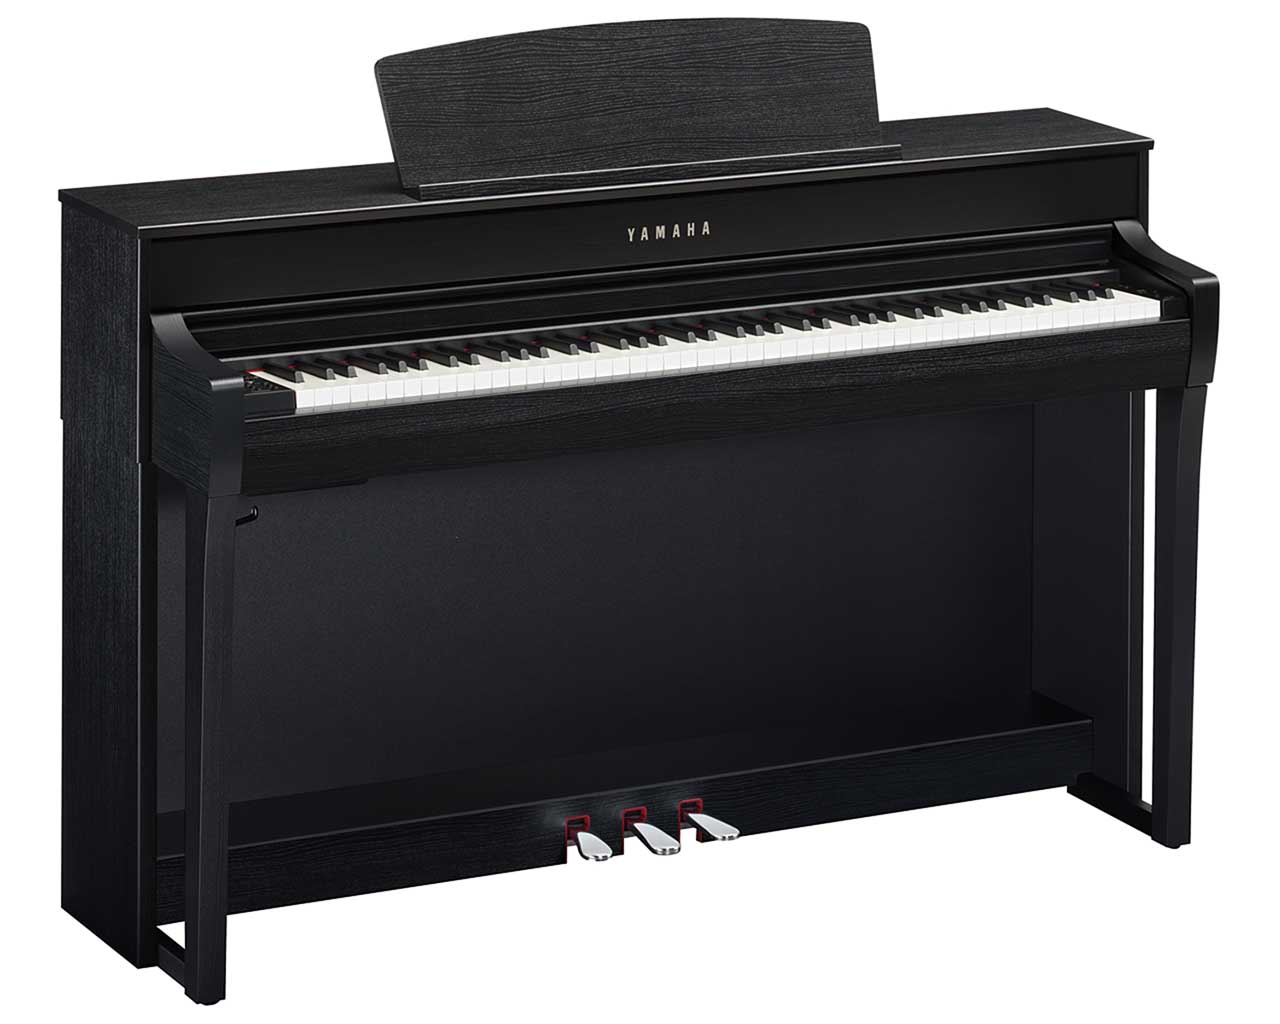 Yamaha-Clavinova-CLP-745-B-Digitalpiano-schwarz-Pianohaus-Filipski